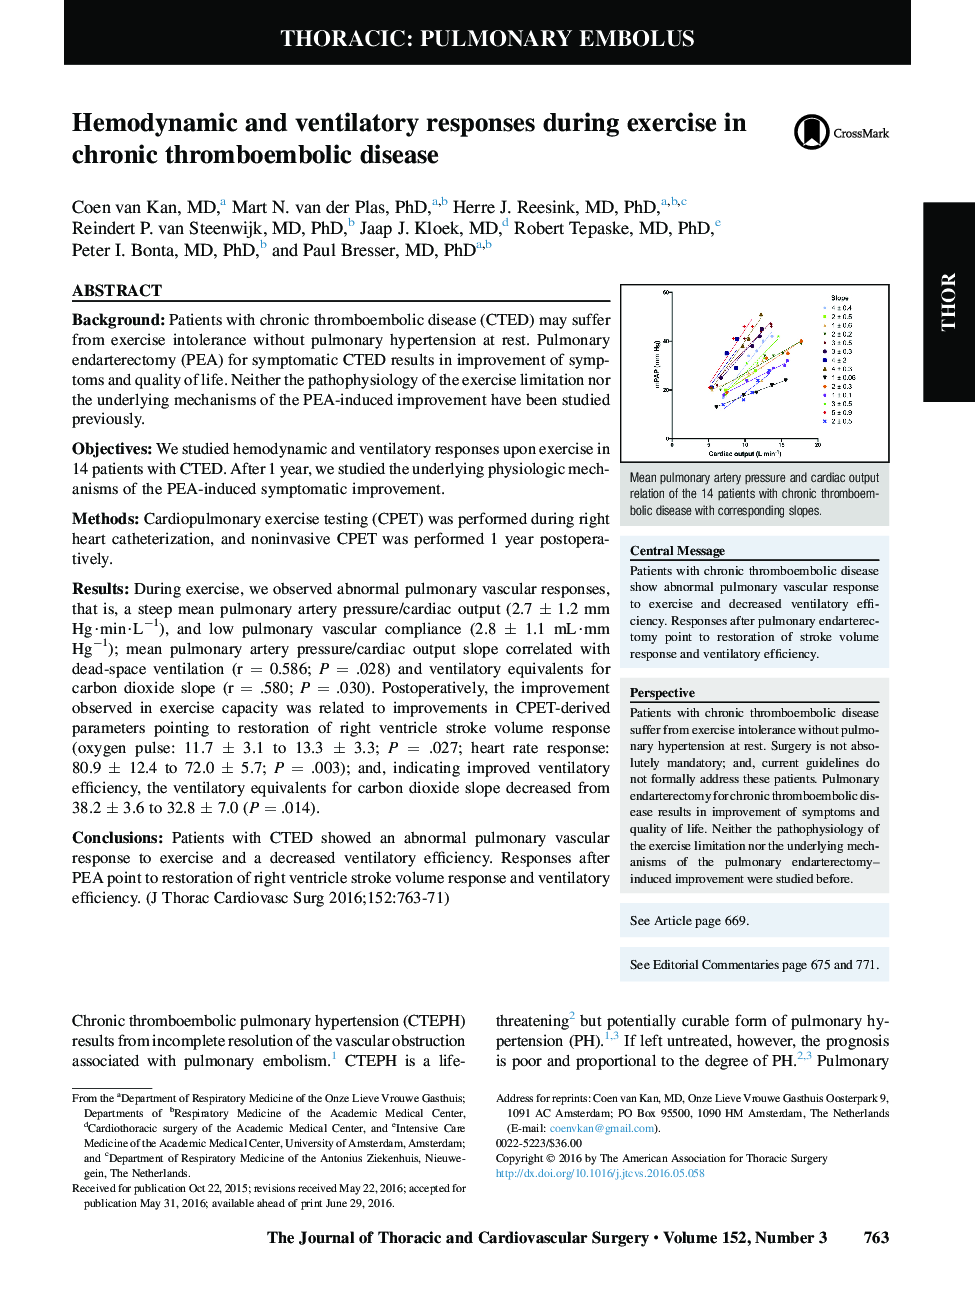 Hemodynamic and ventilatory responses during exercise in chronic thromboembolic disease